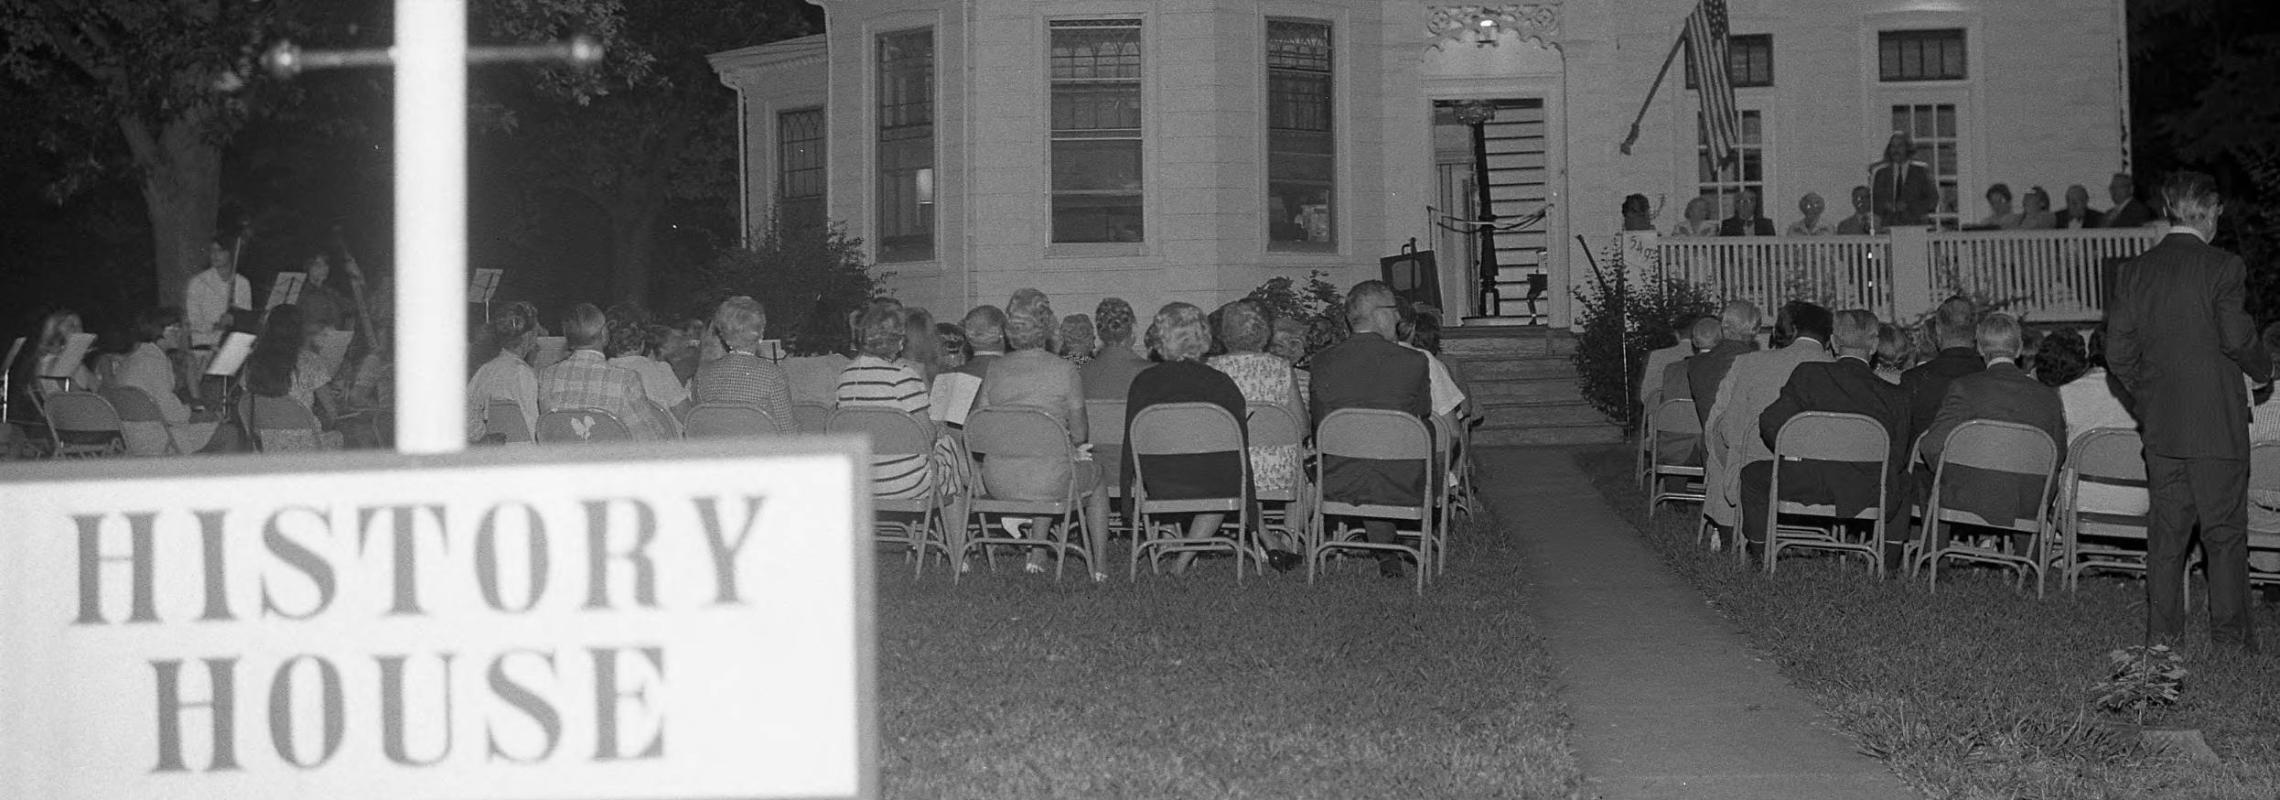 Dedication of Mclagan-Black House as new home of Kirkwood Historical Society in Kirkwood, Missouri, 1973.